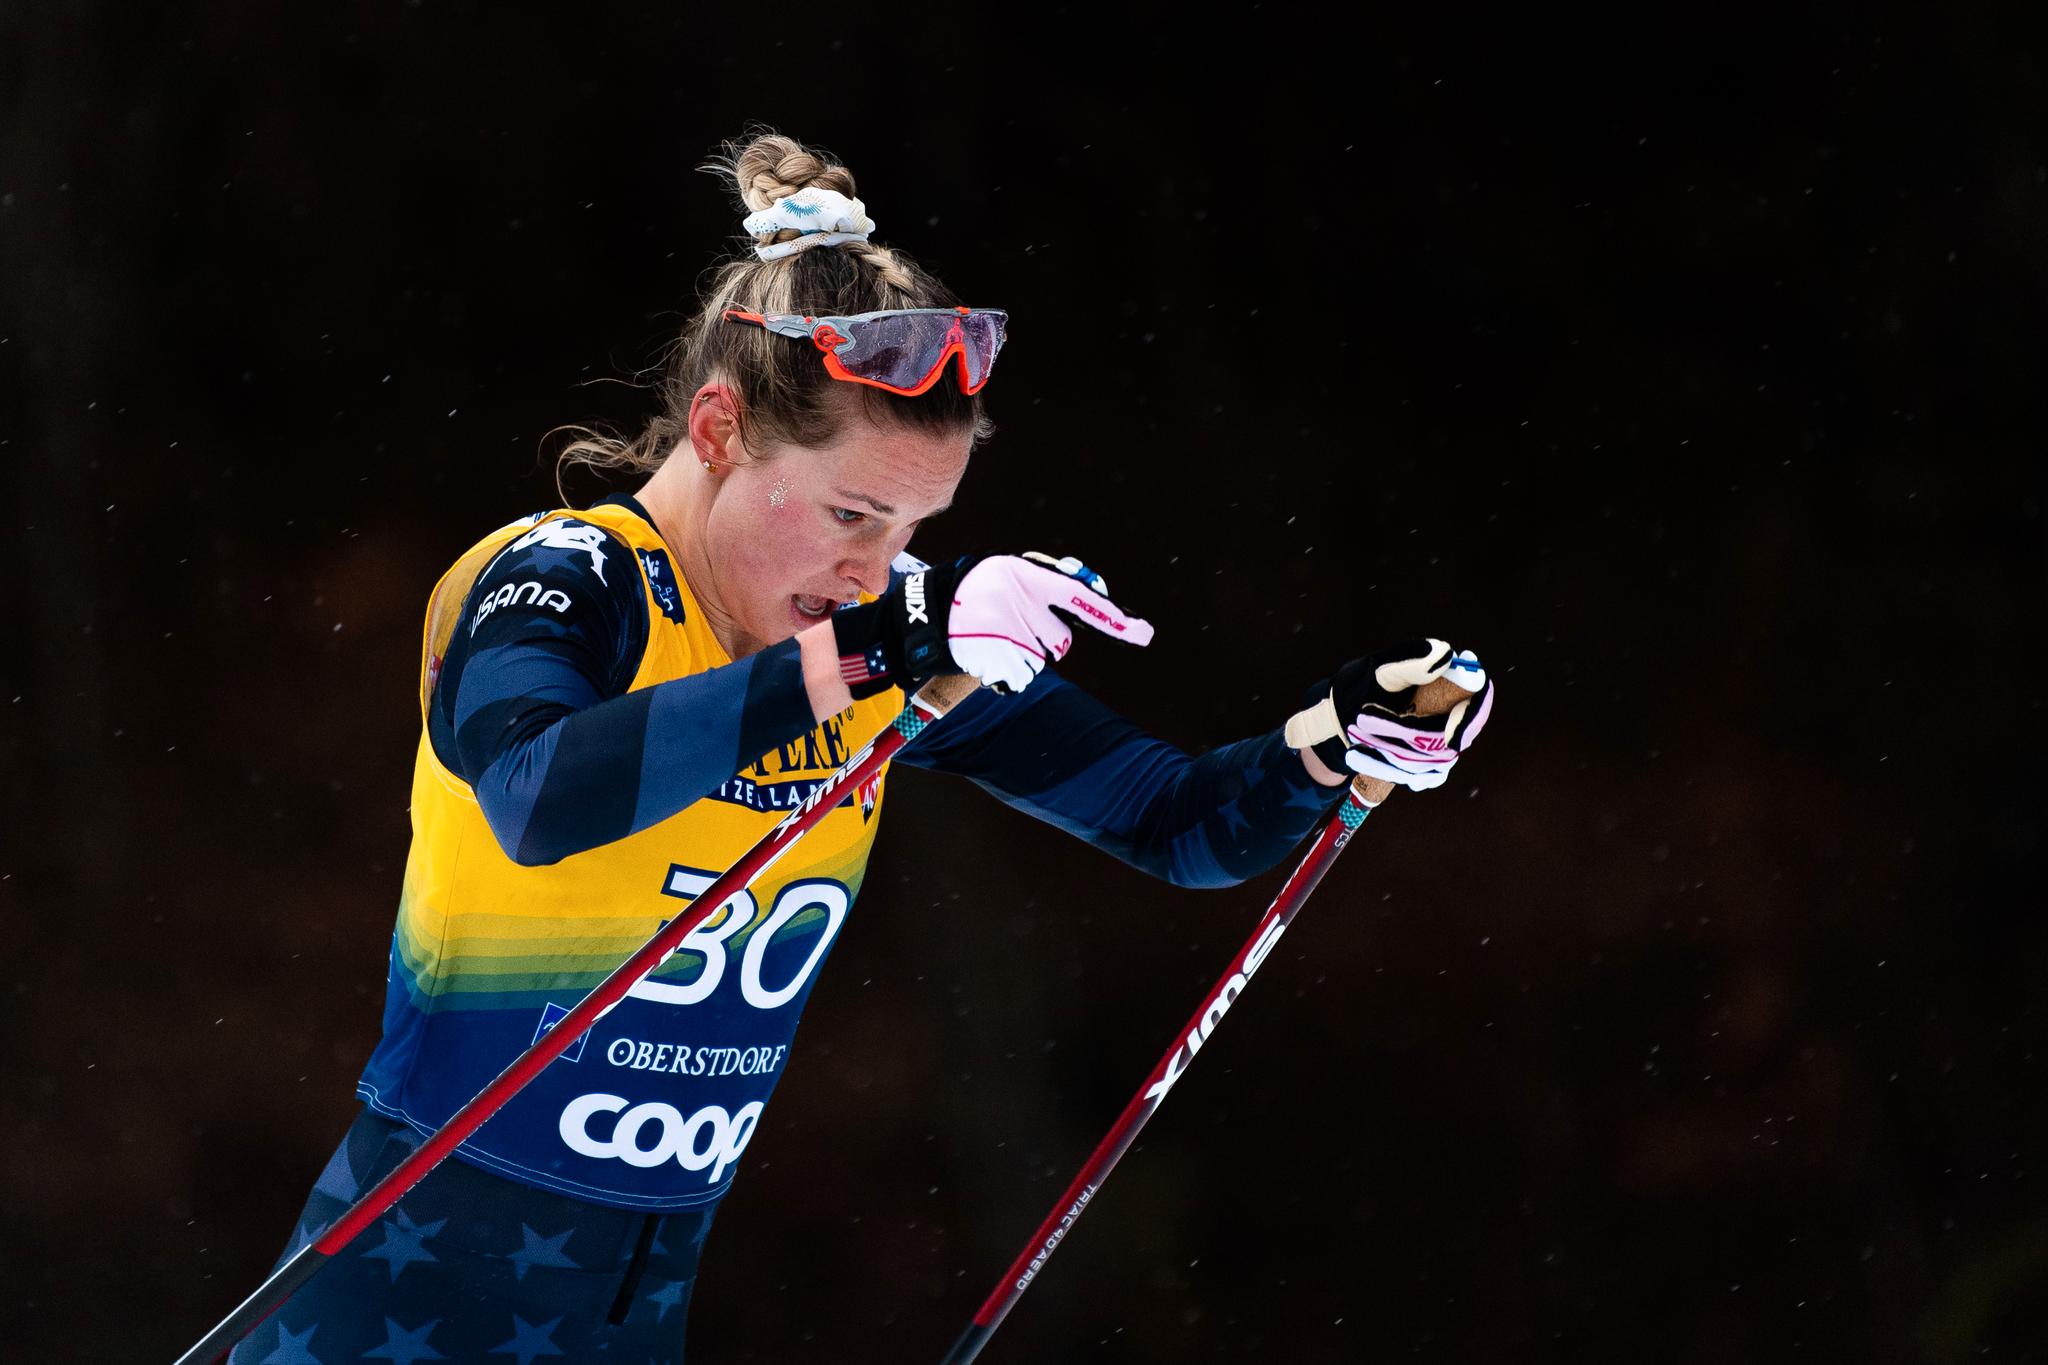 FÅR DET IKKE TIL: Jessica Diggins er over fire minutter bak Frida Karlsson i Tour de Ski-sammendraget etter tre etapper.